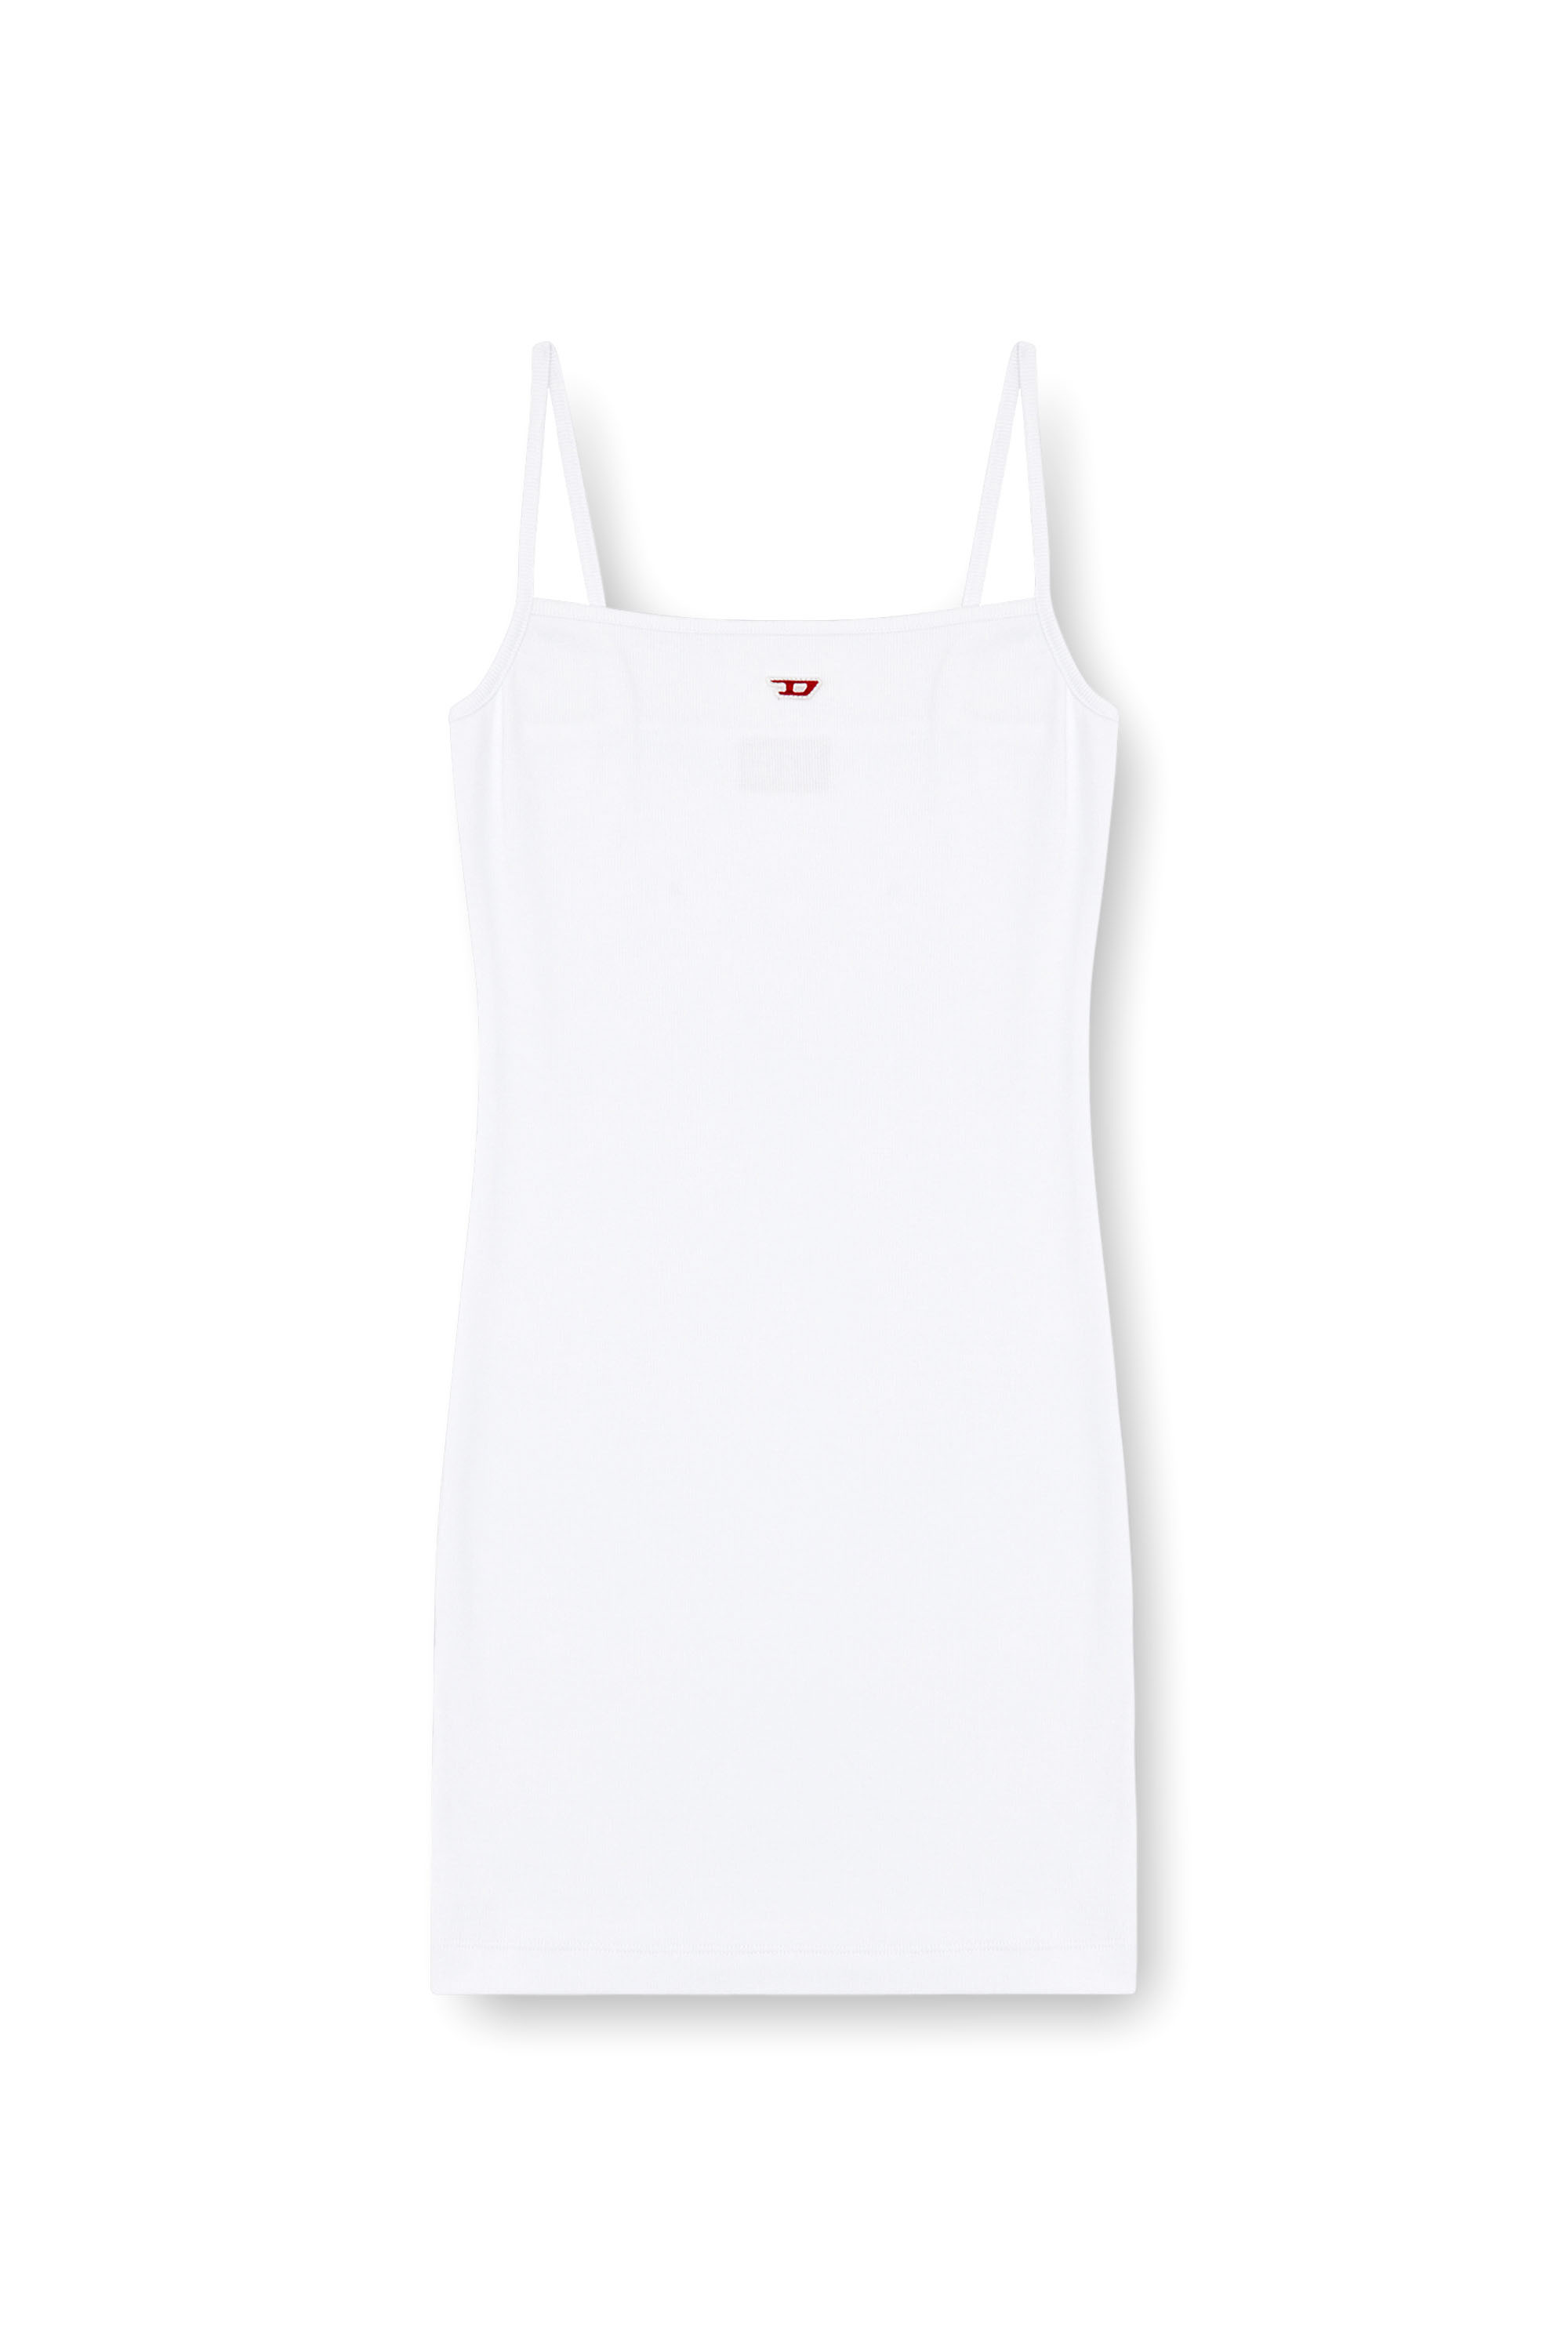 Diesel - D-HOPY-D, Mujer Vestido corto lencero con logotipo D in Blanco - Image 4